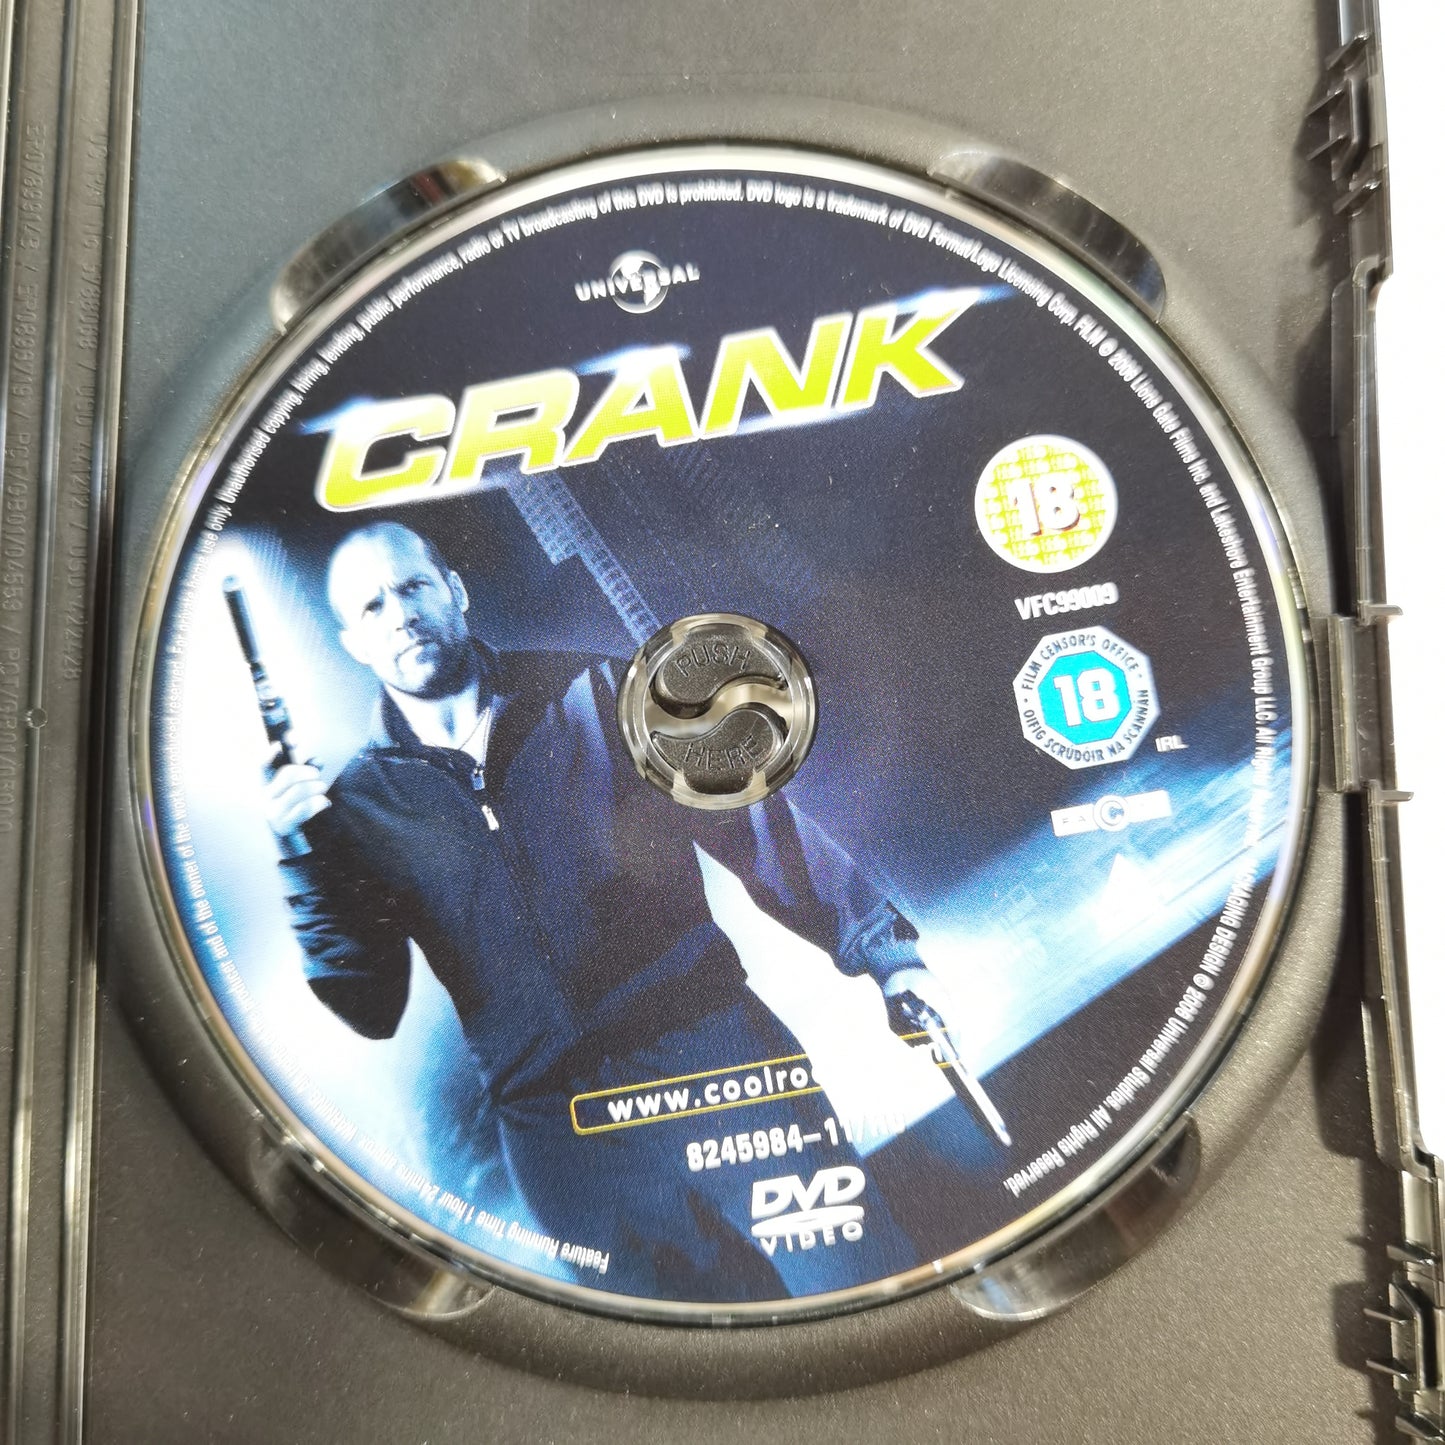 Crank (2006) - DVD UK 2006